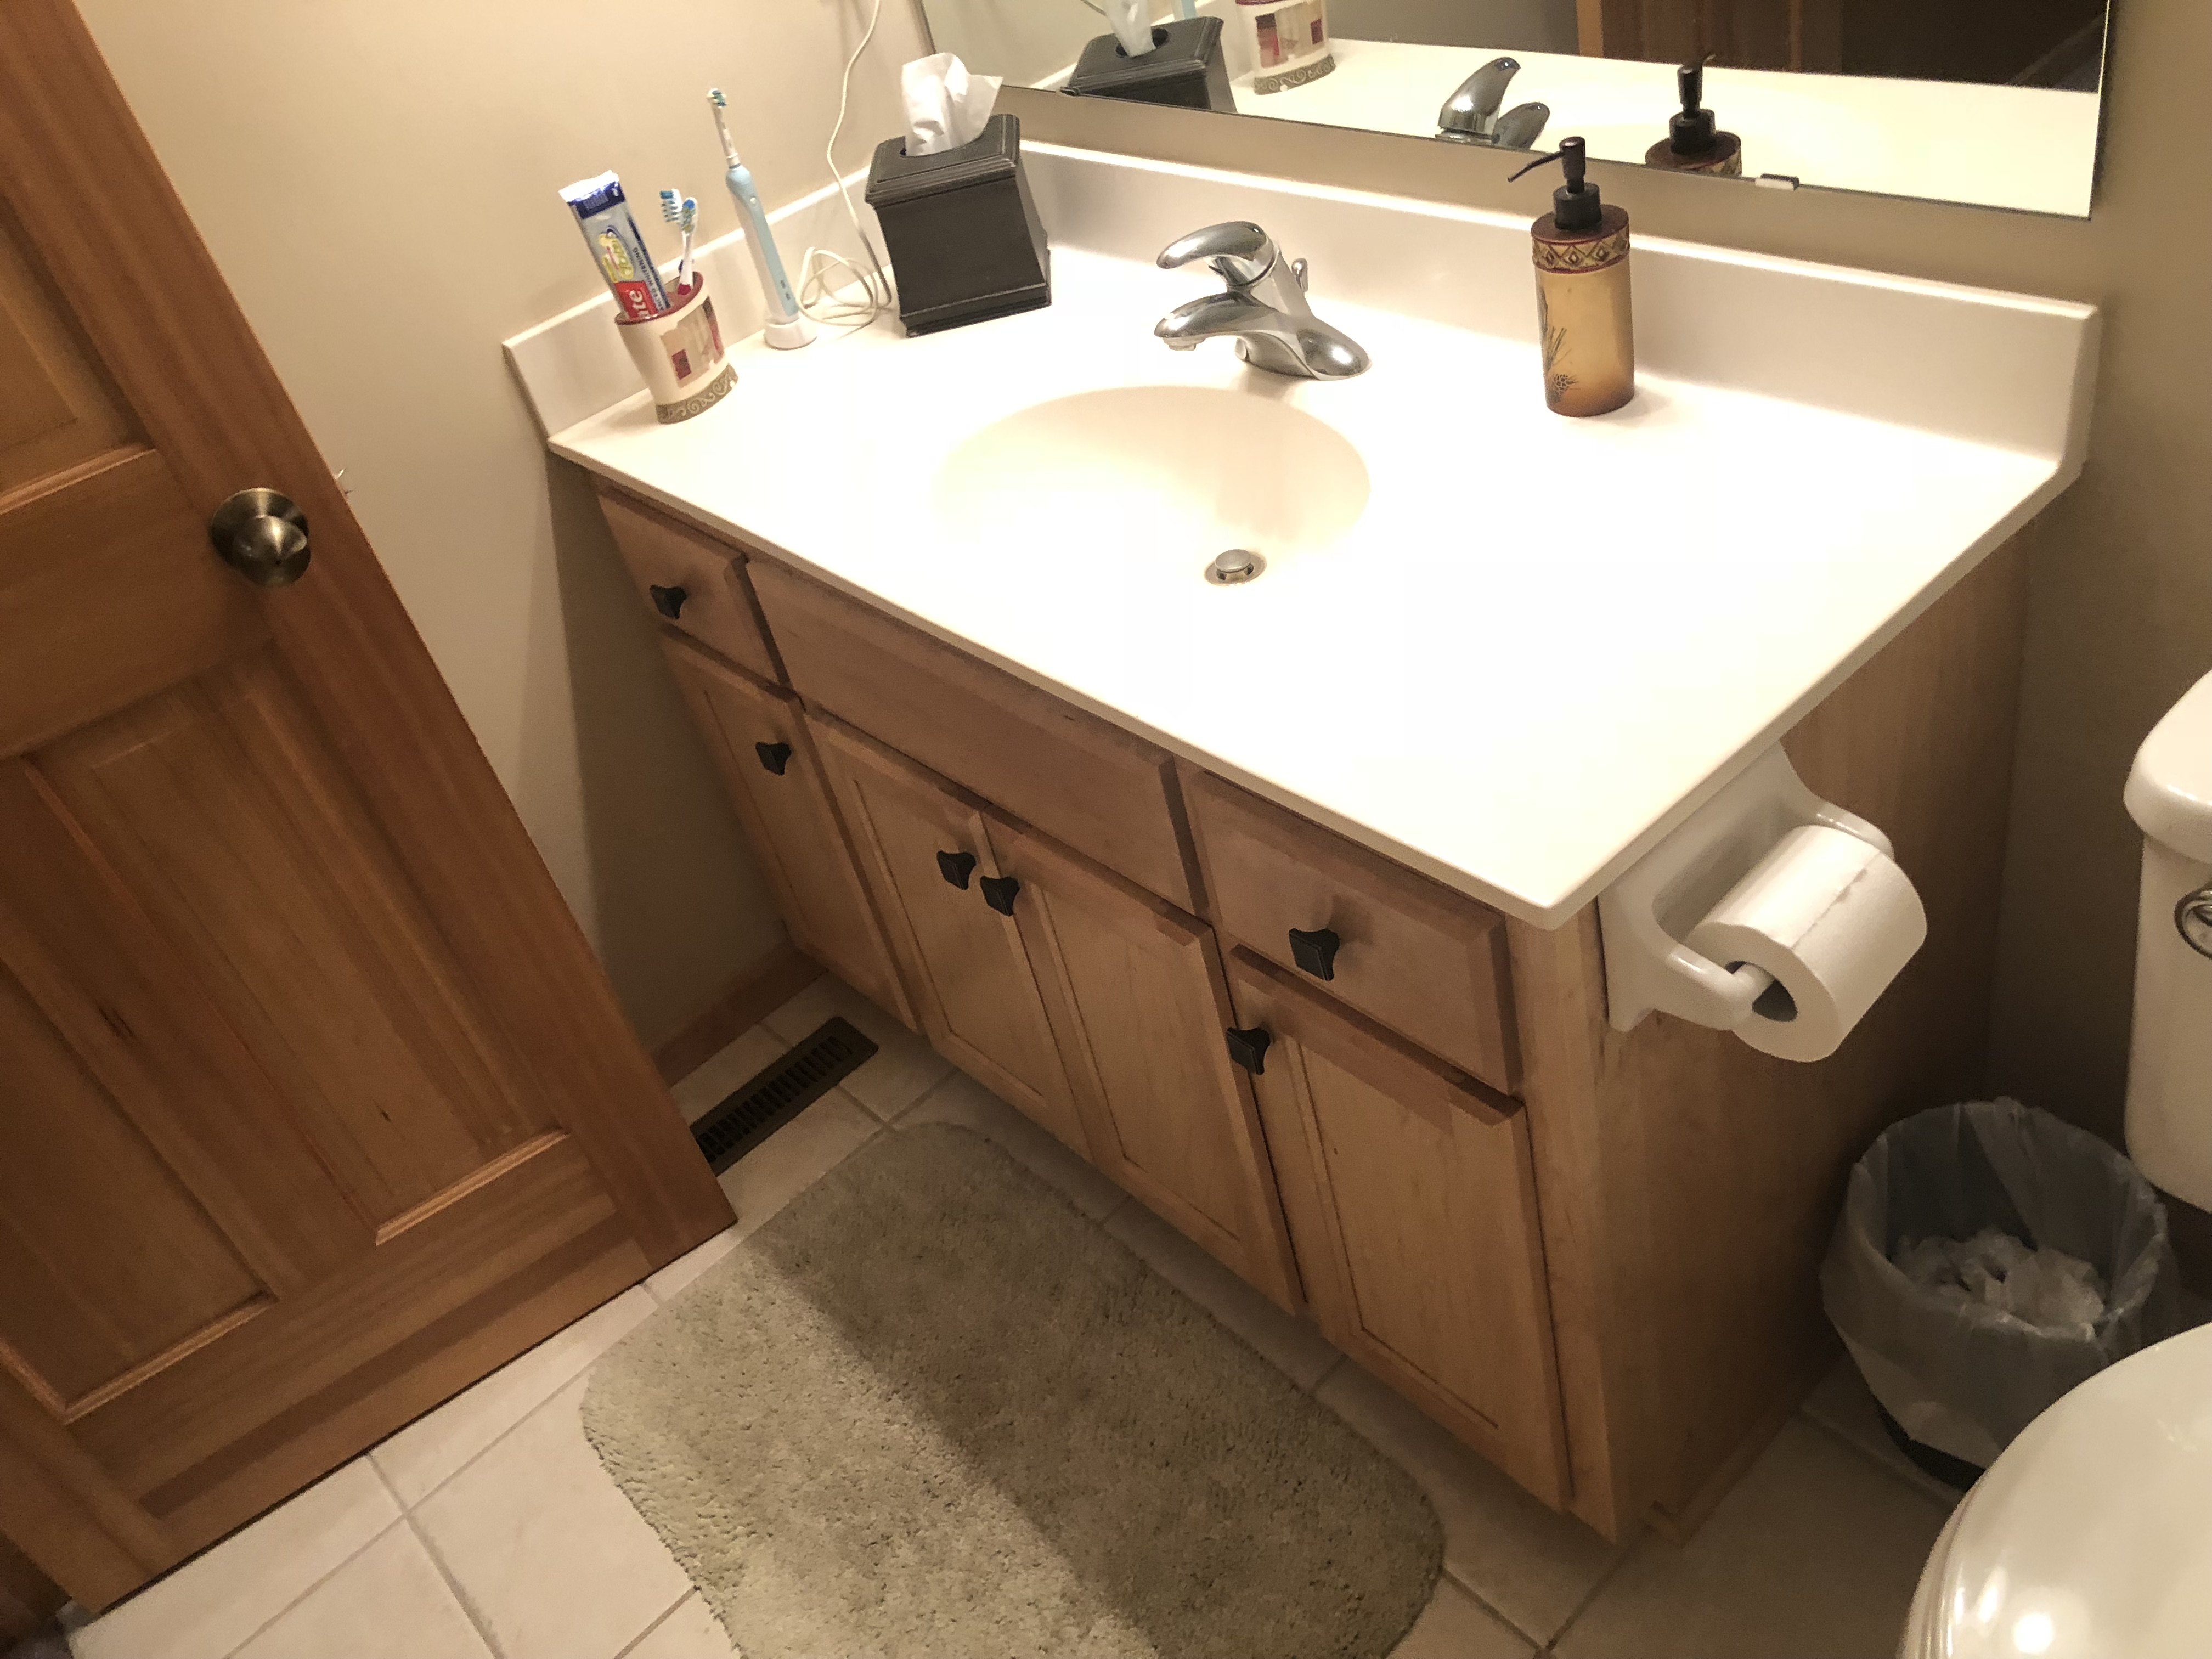 Lakeville Bathroom Remodel - Before Photo